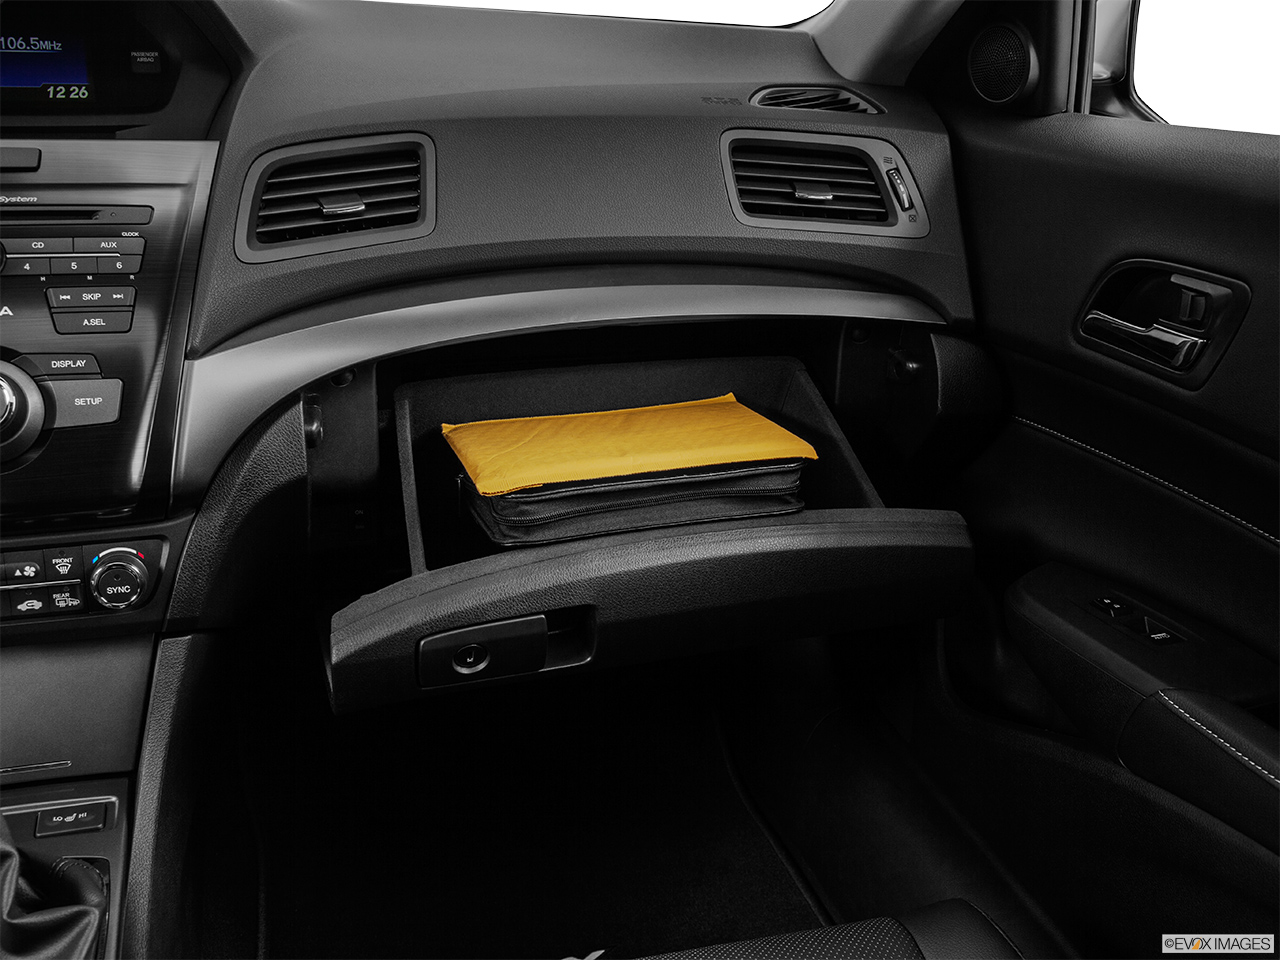 2015 Acura ILX 6-Speed Manual Glove box open. 